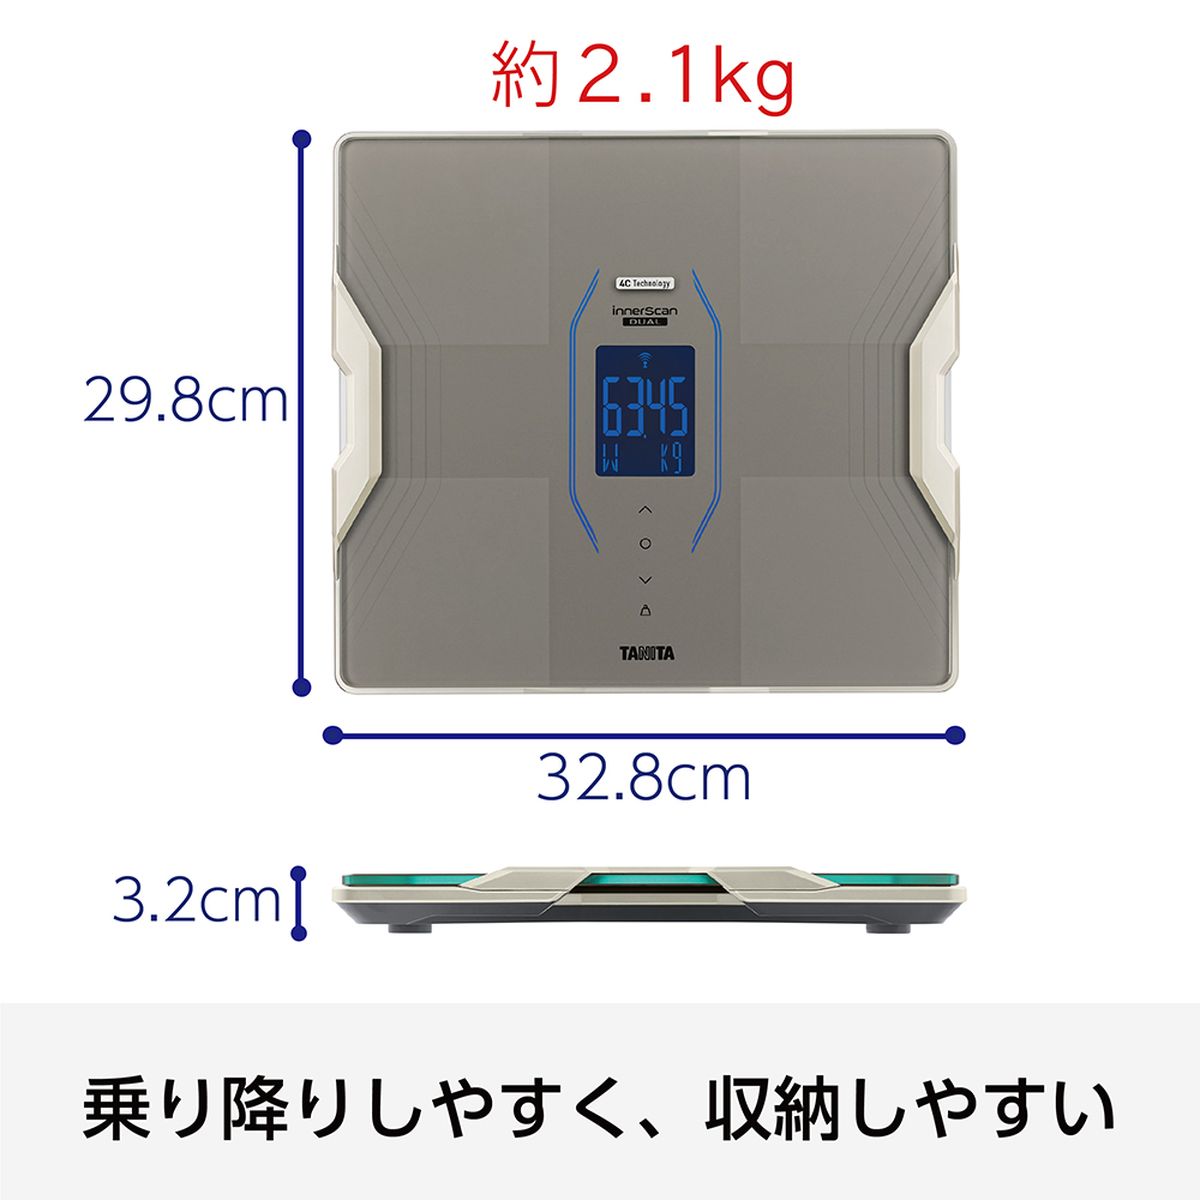 TANITA 体組成計 体重計 innerScan DUAL インナースキャンデュアル ゴールド スマホ連動 日本製